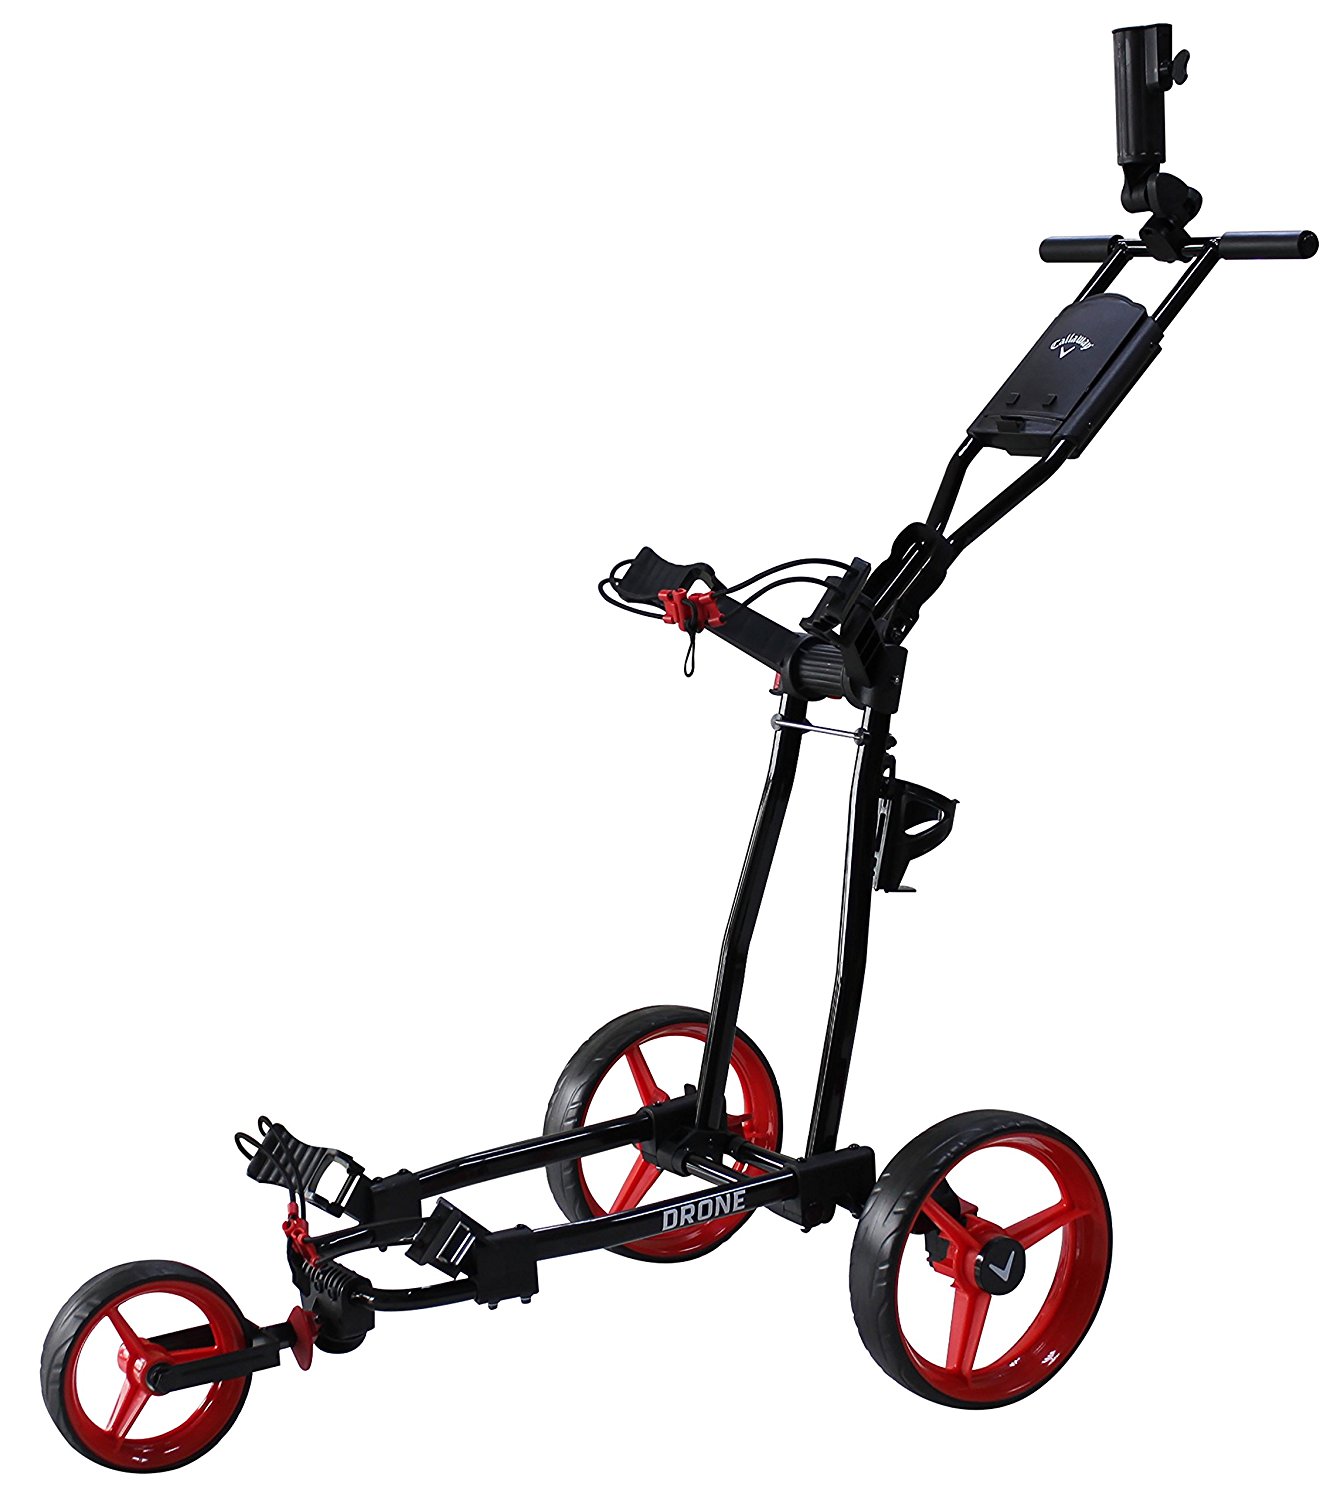 Callaway Drone 3 Wheel Golf Push Carts